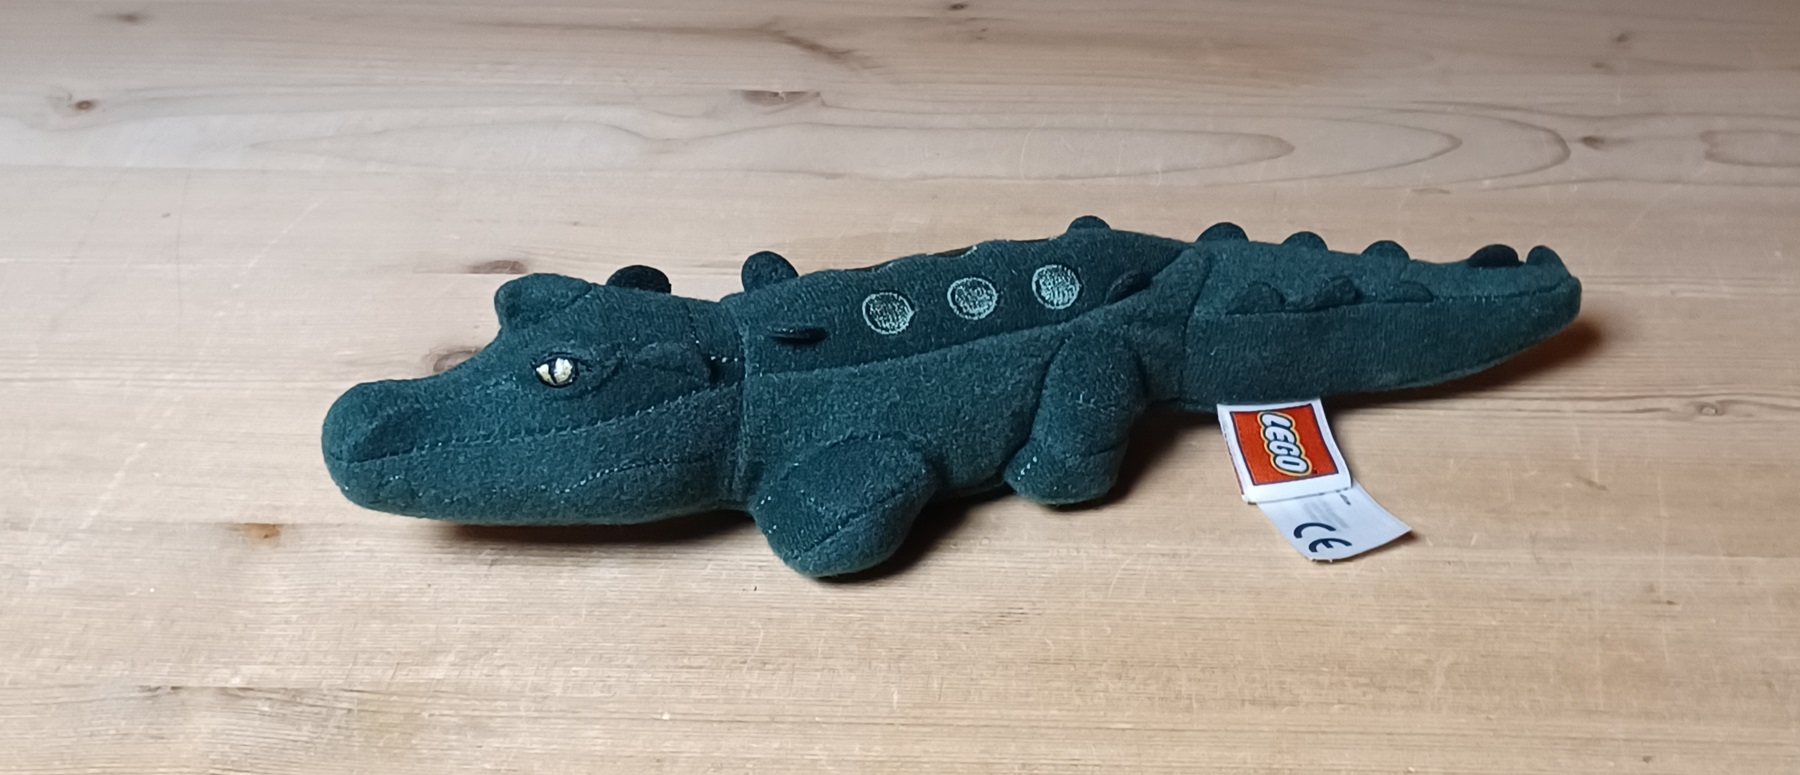 0500 Lego Alligator